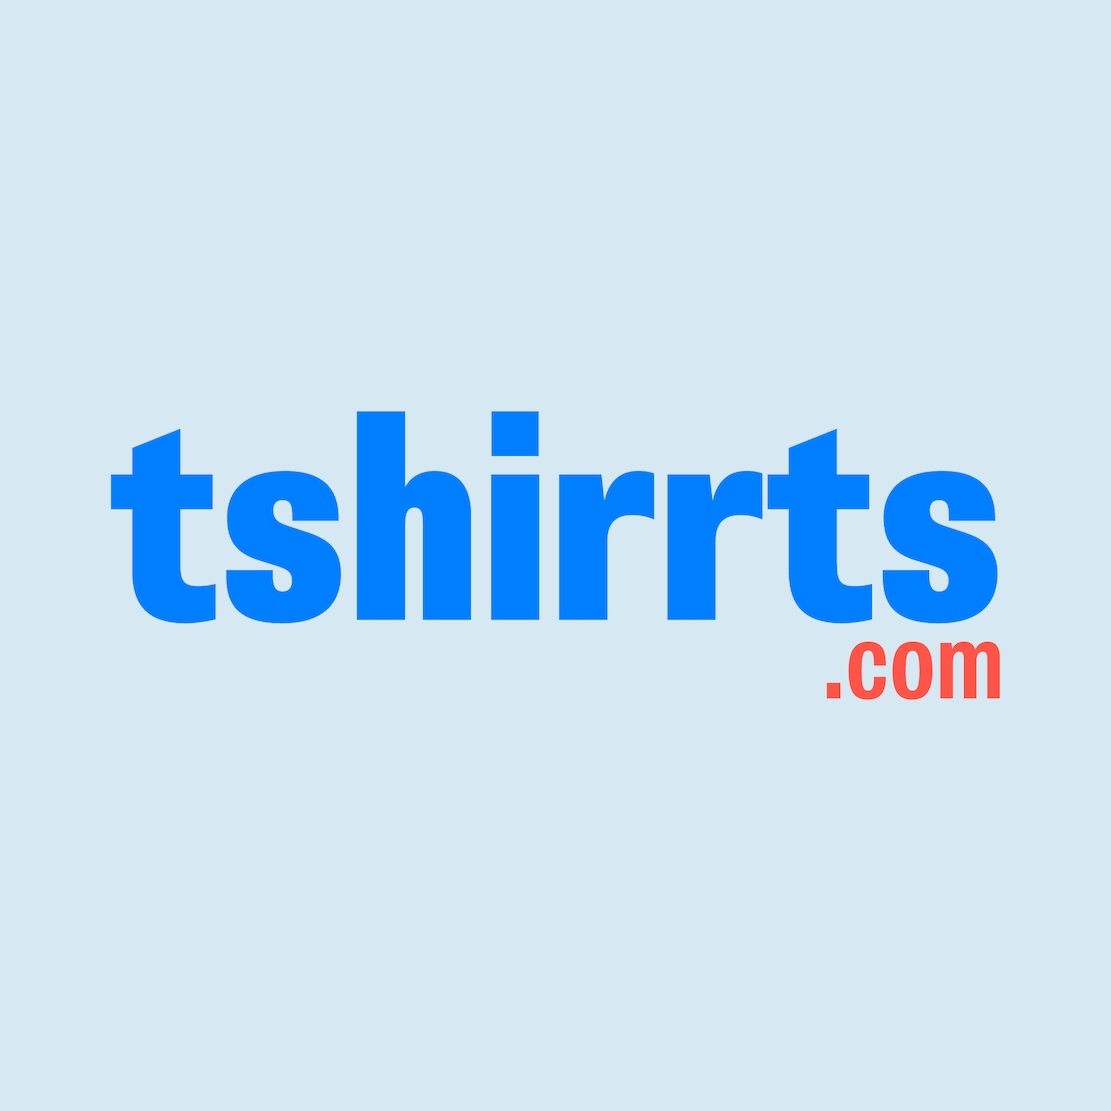 tshirrts.com custom logo product card image